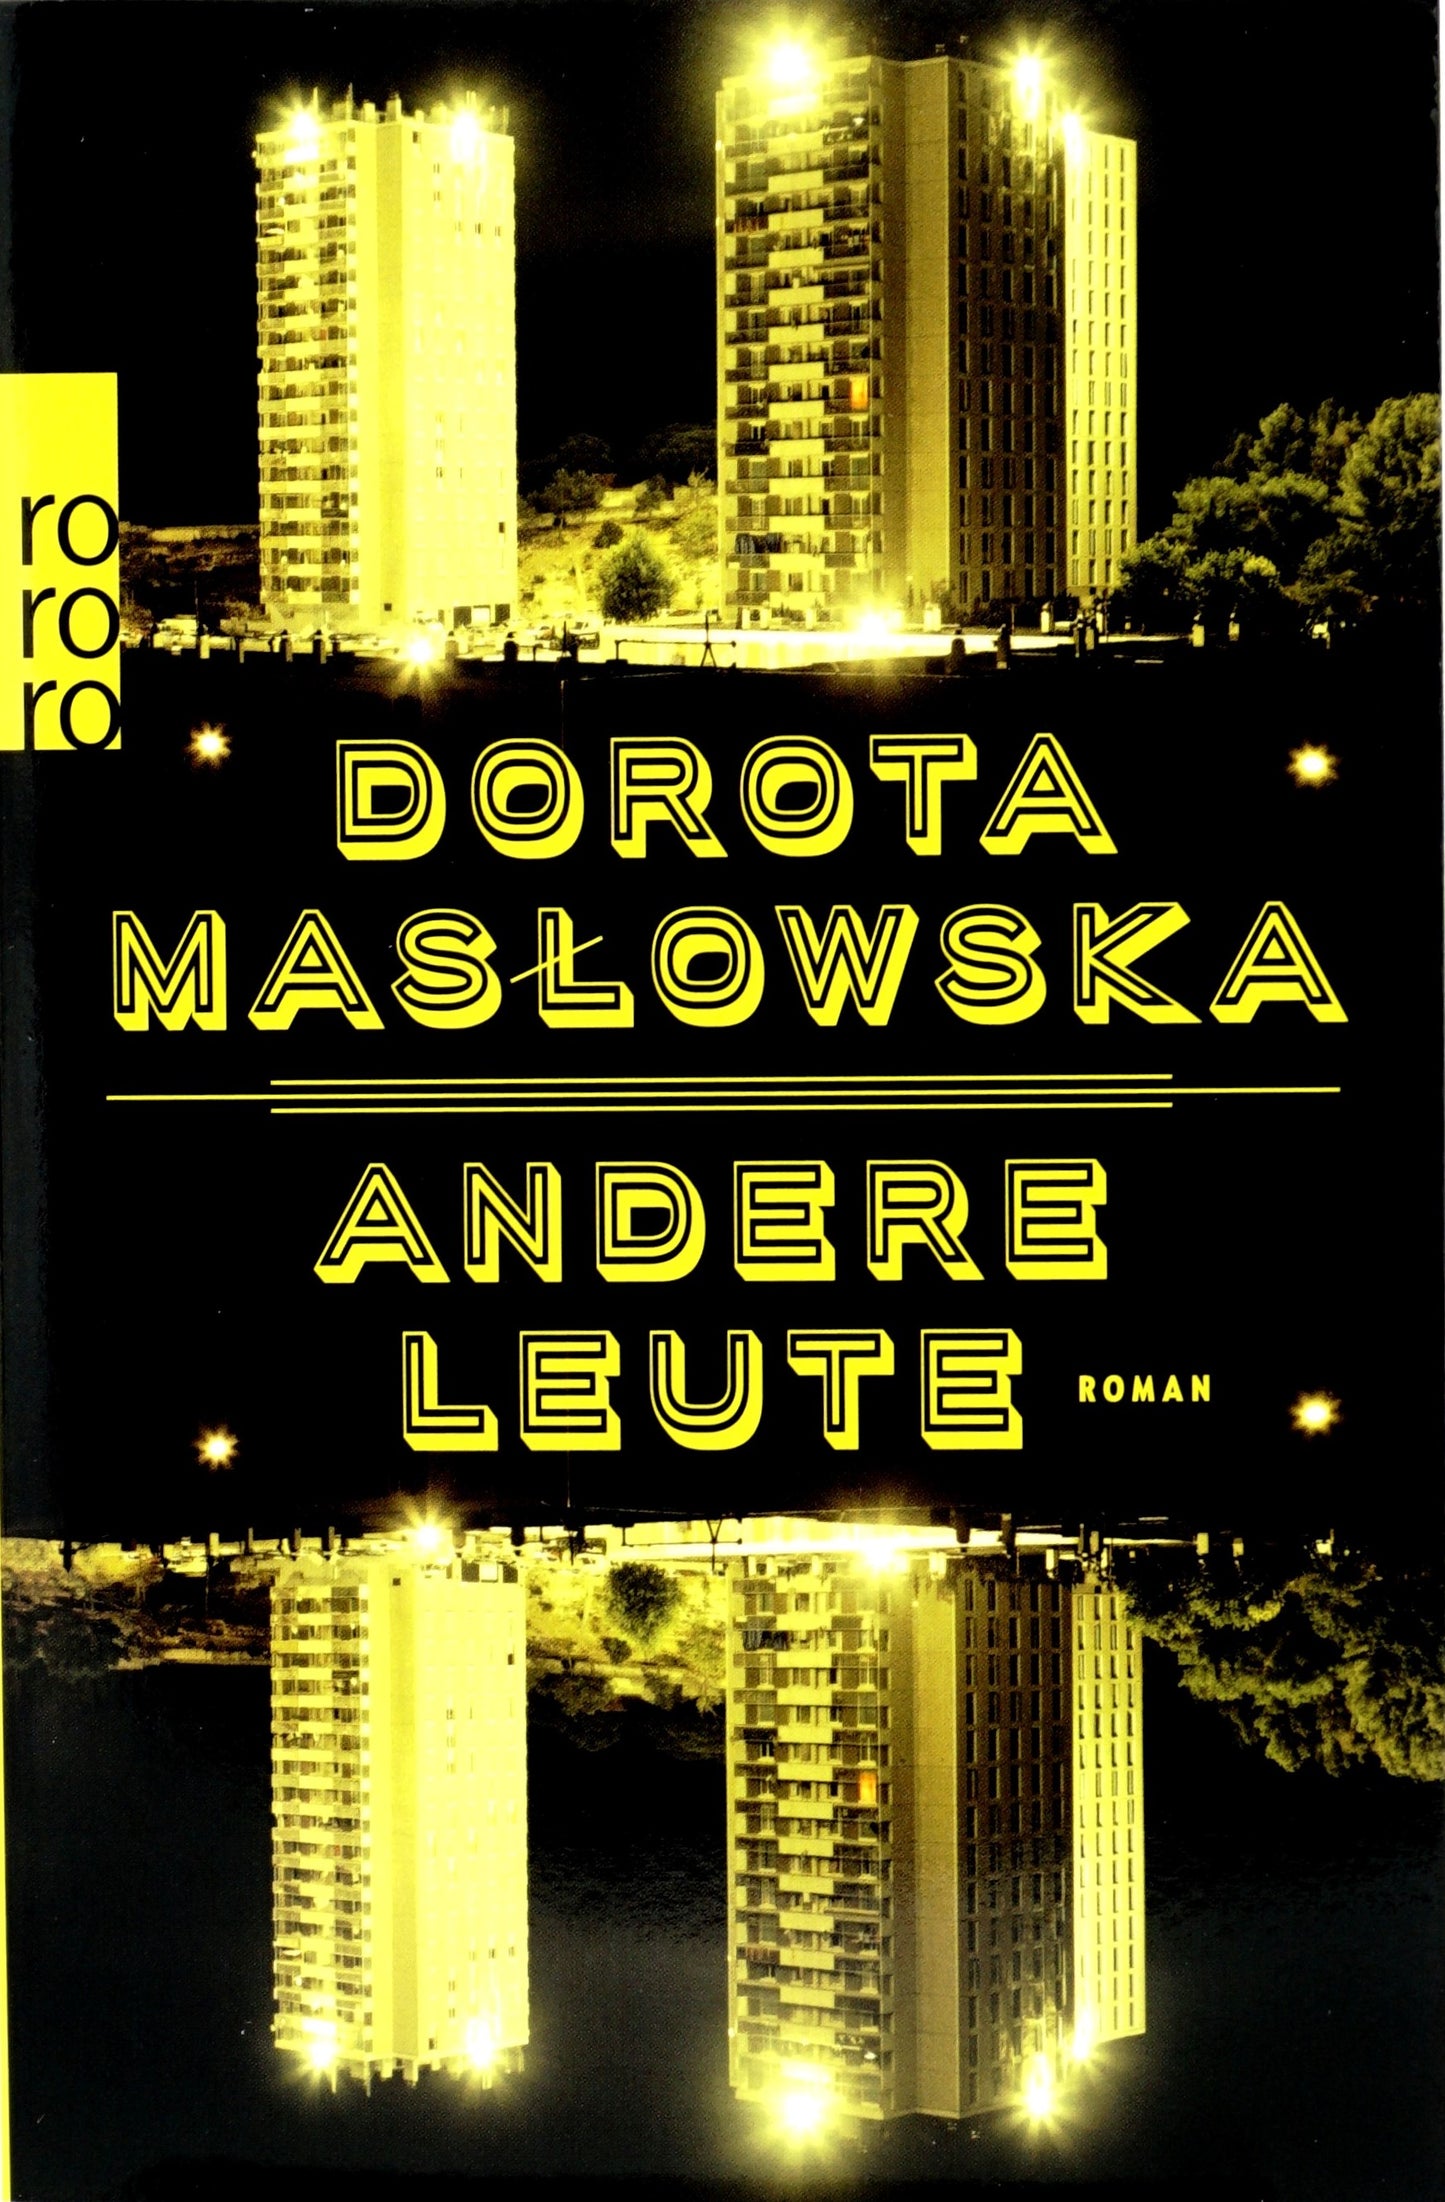 Andere Leute - Dorota Maslowska